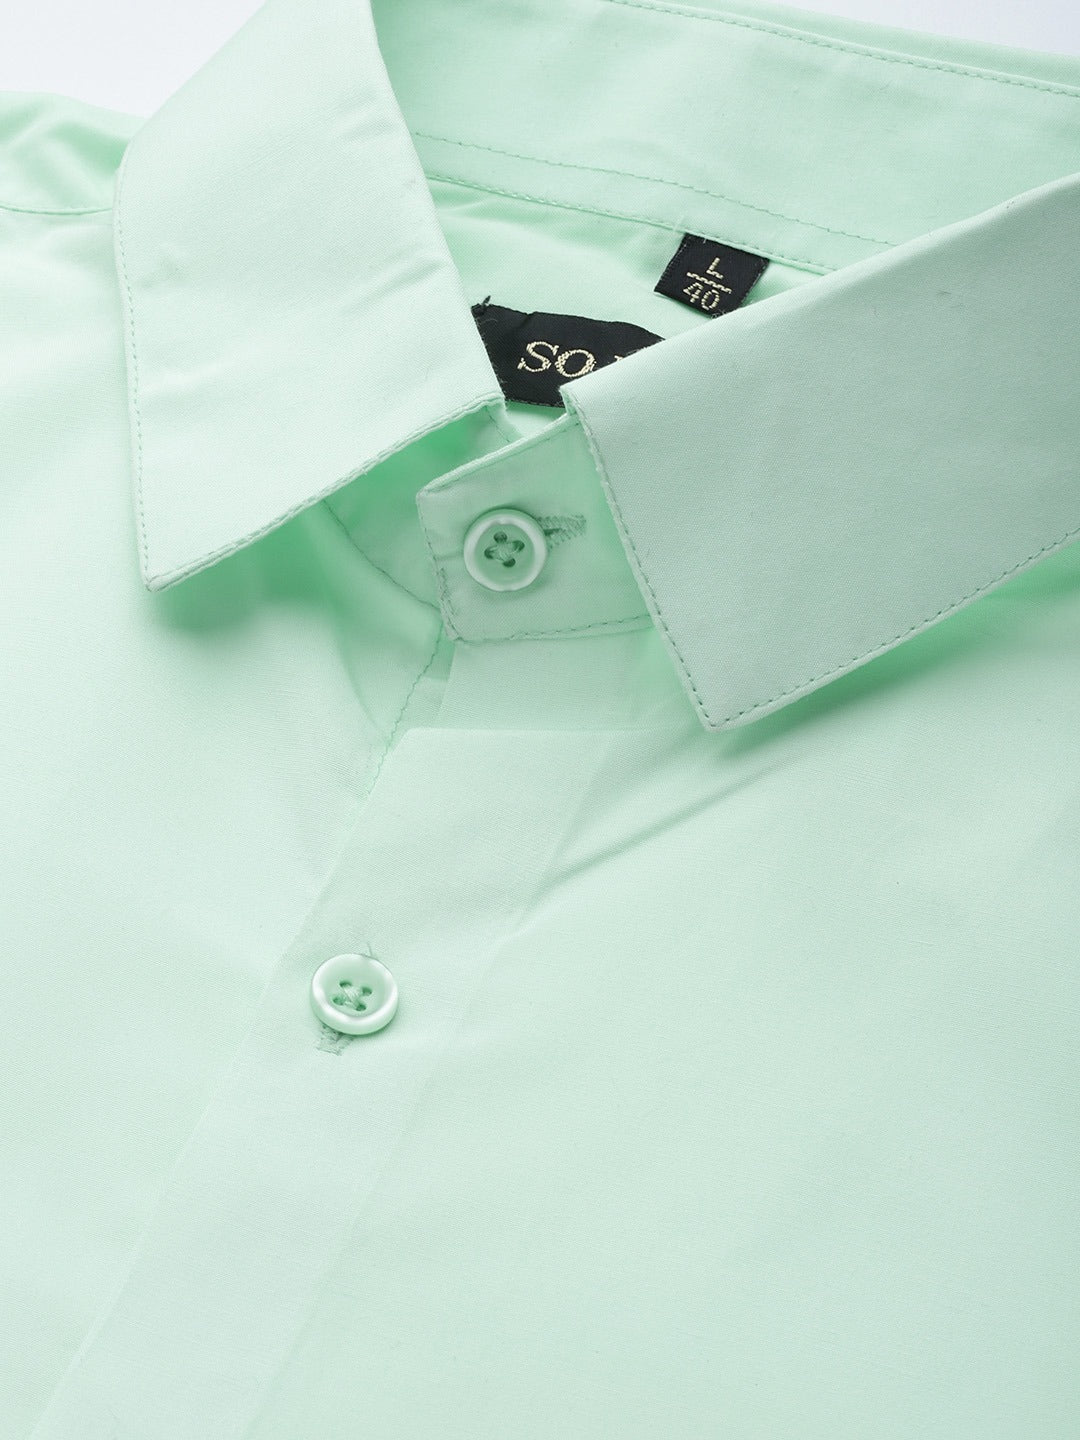 Men's Cotton Sea Green Half sleeves Casual Shirt